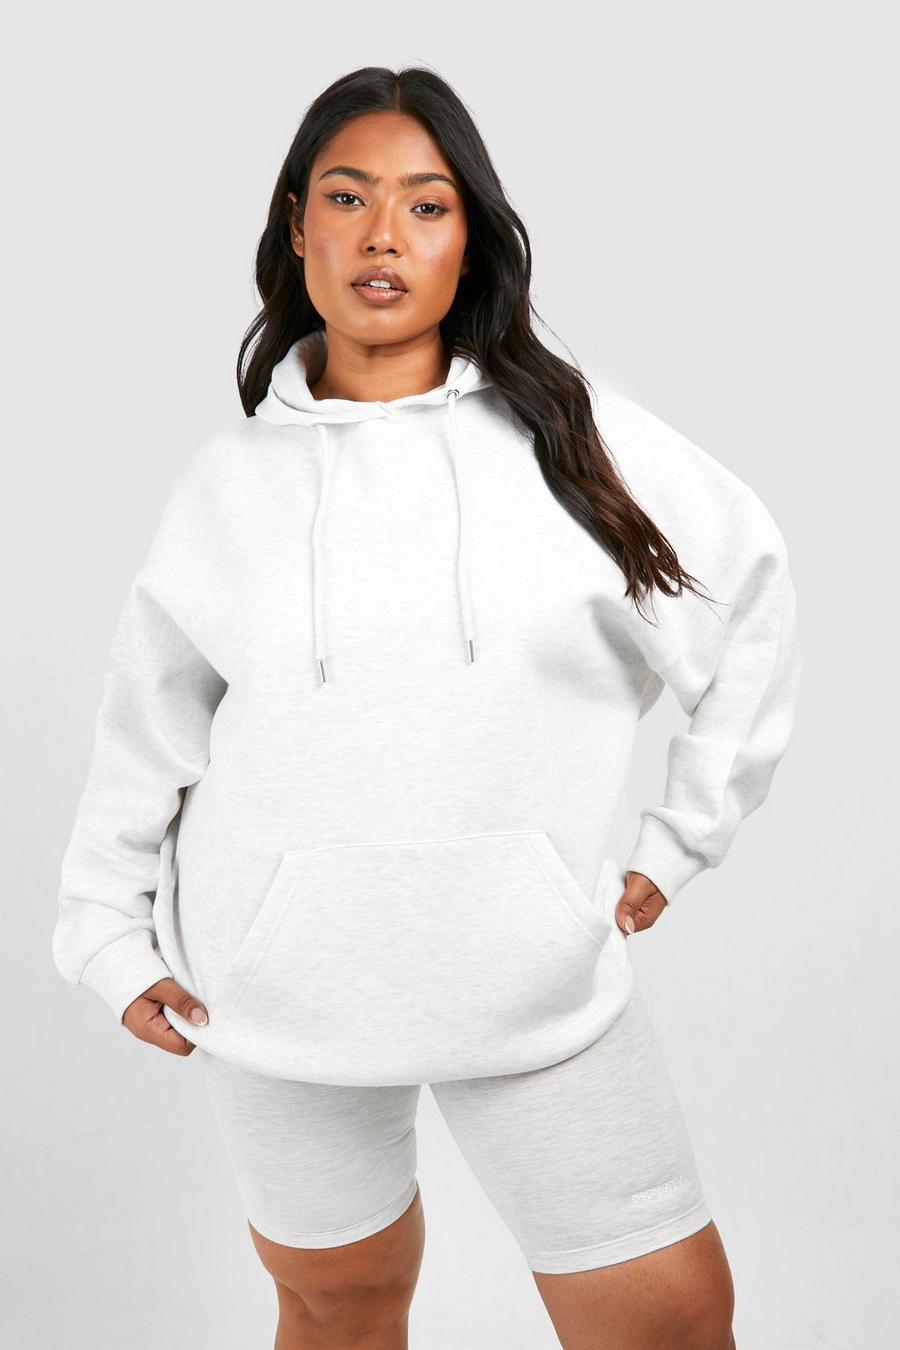 Women's Sport Suits 2019 Brand New Tracksuit for women sweatshirt and  Joggers sets Plus Size Autumn Winter Coat svitshot hoodie